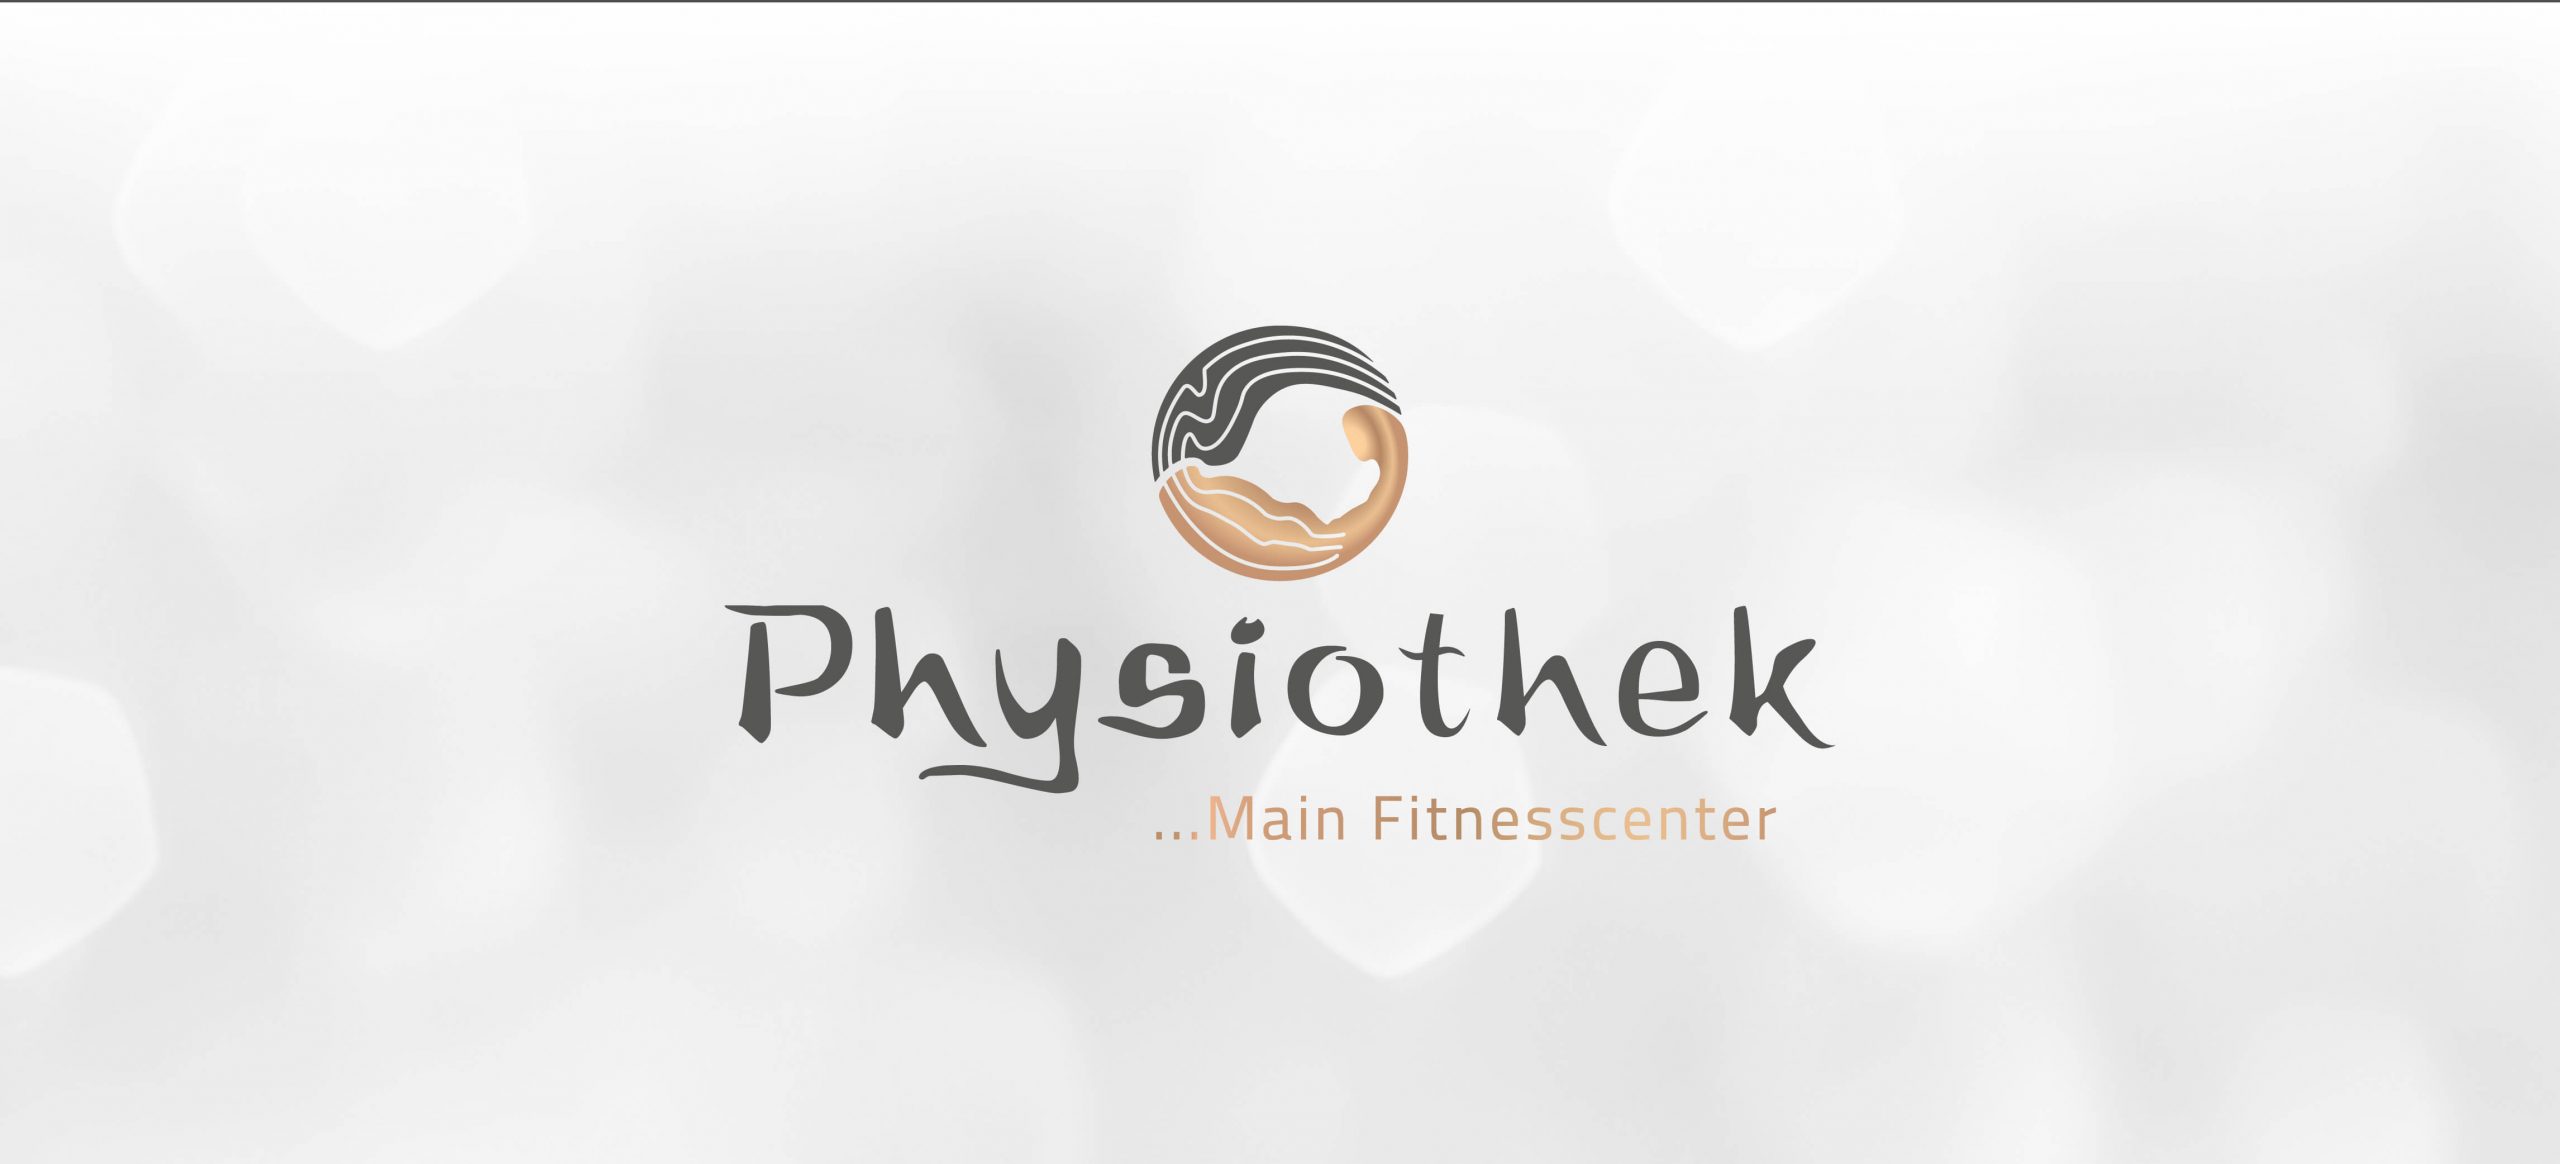 Physiothek-Fitnesscenter